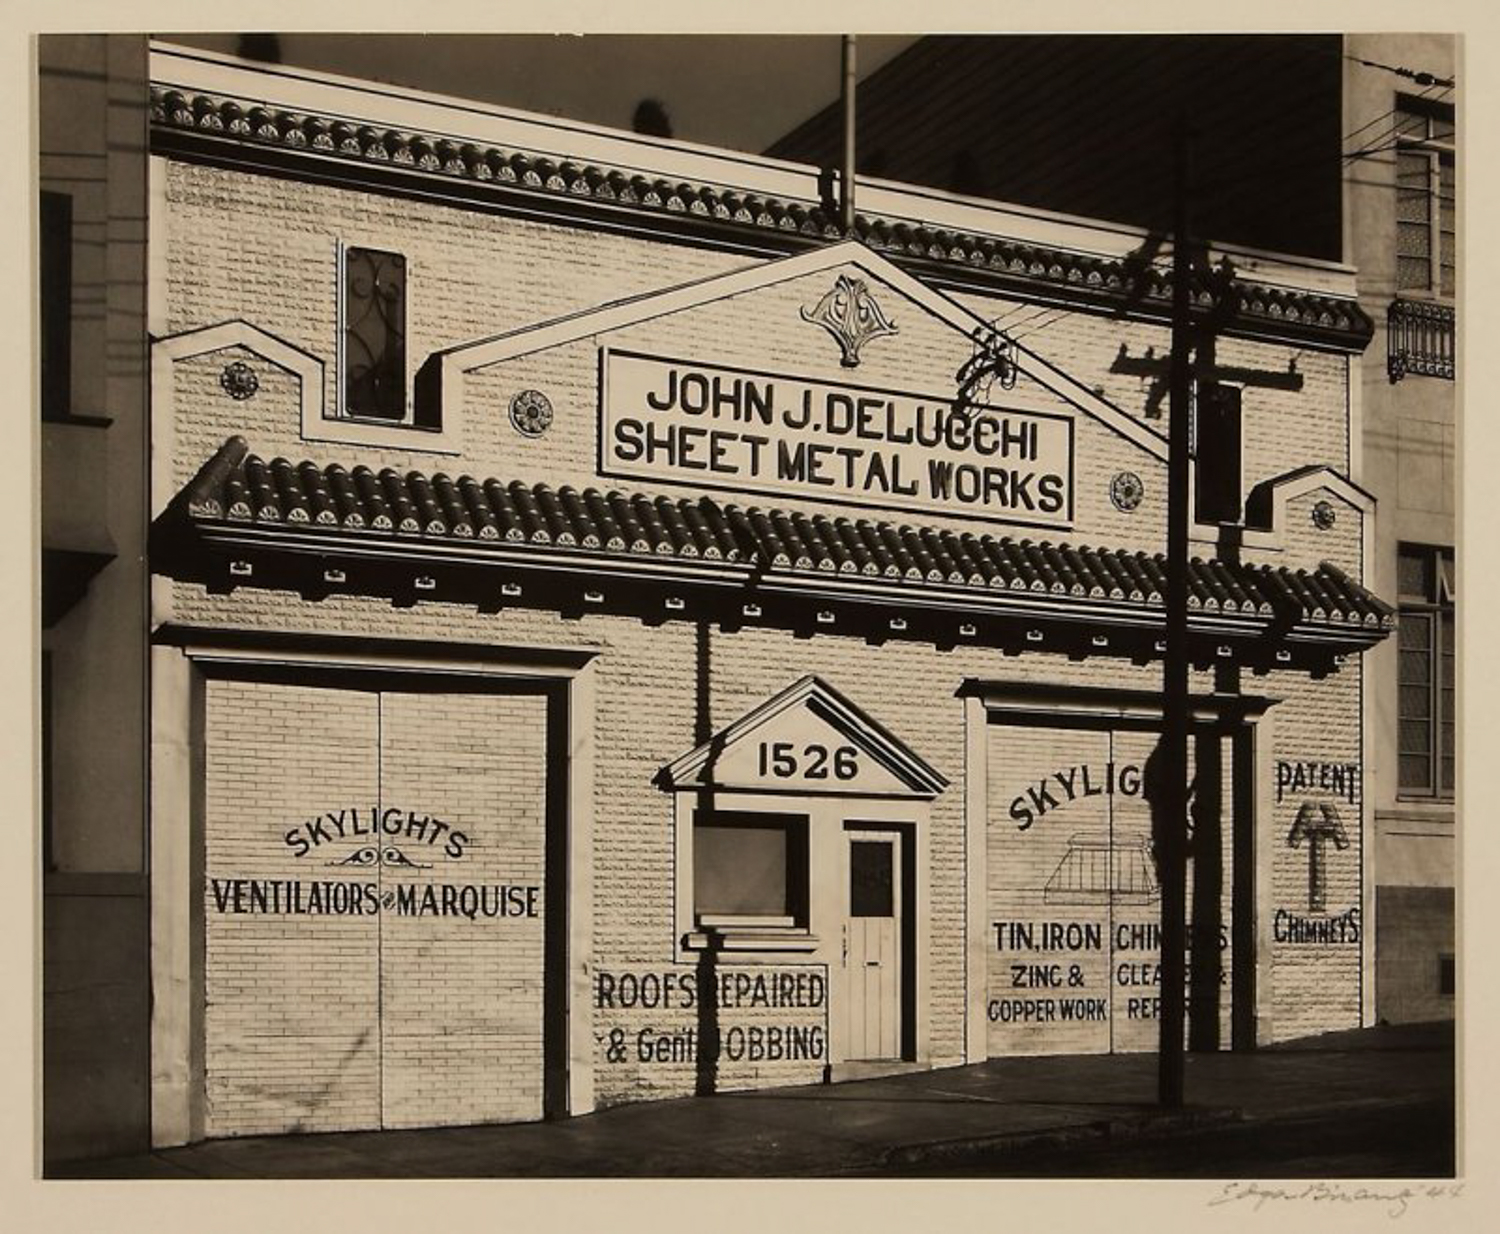 John J. DeLucchi Sheet Metal Works, 1526 Powell Street, San Francisco Photographer- Edgar F. Bissantz, image via the Fine Arts Museum of San Francisco